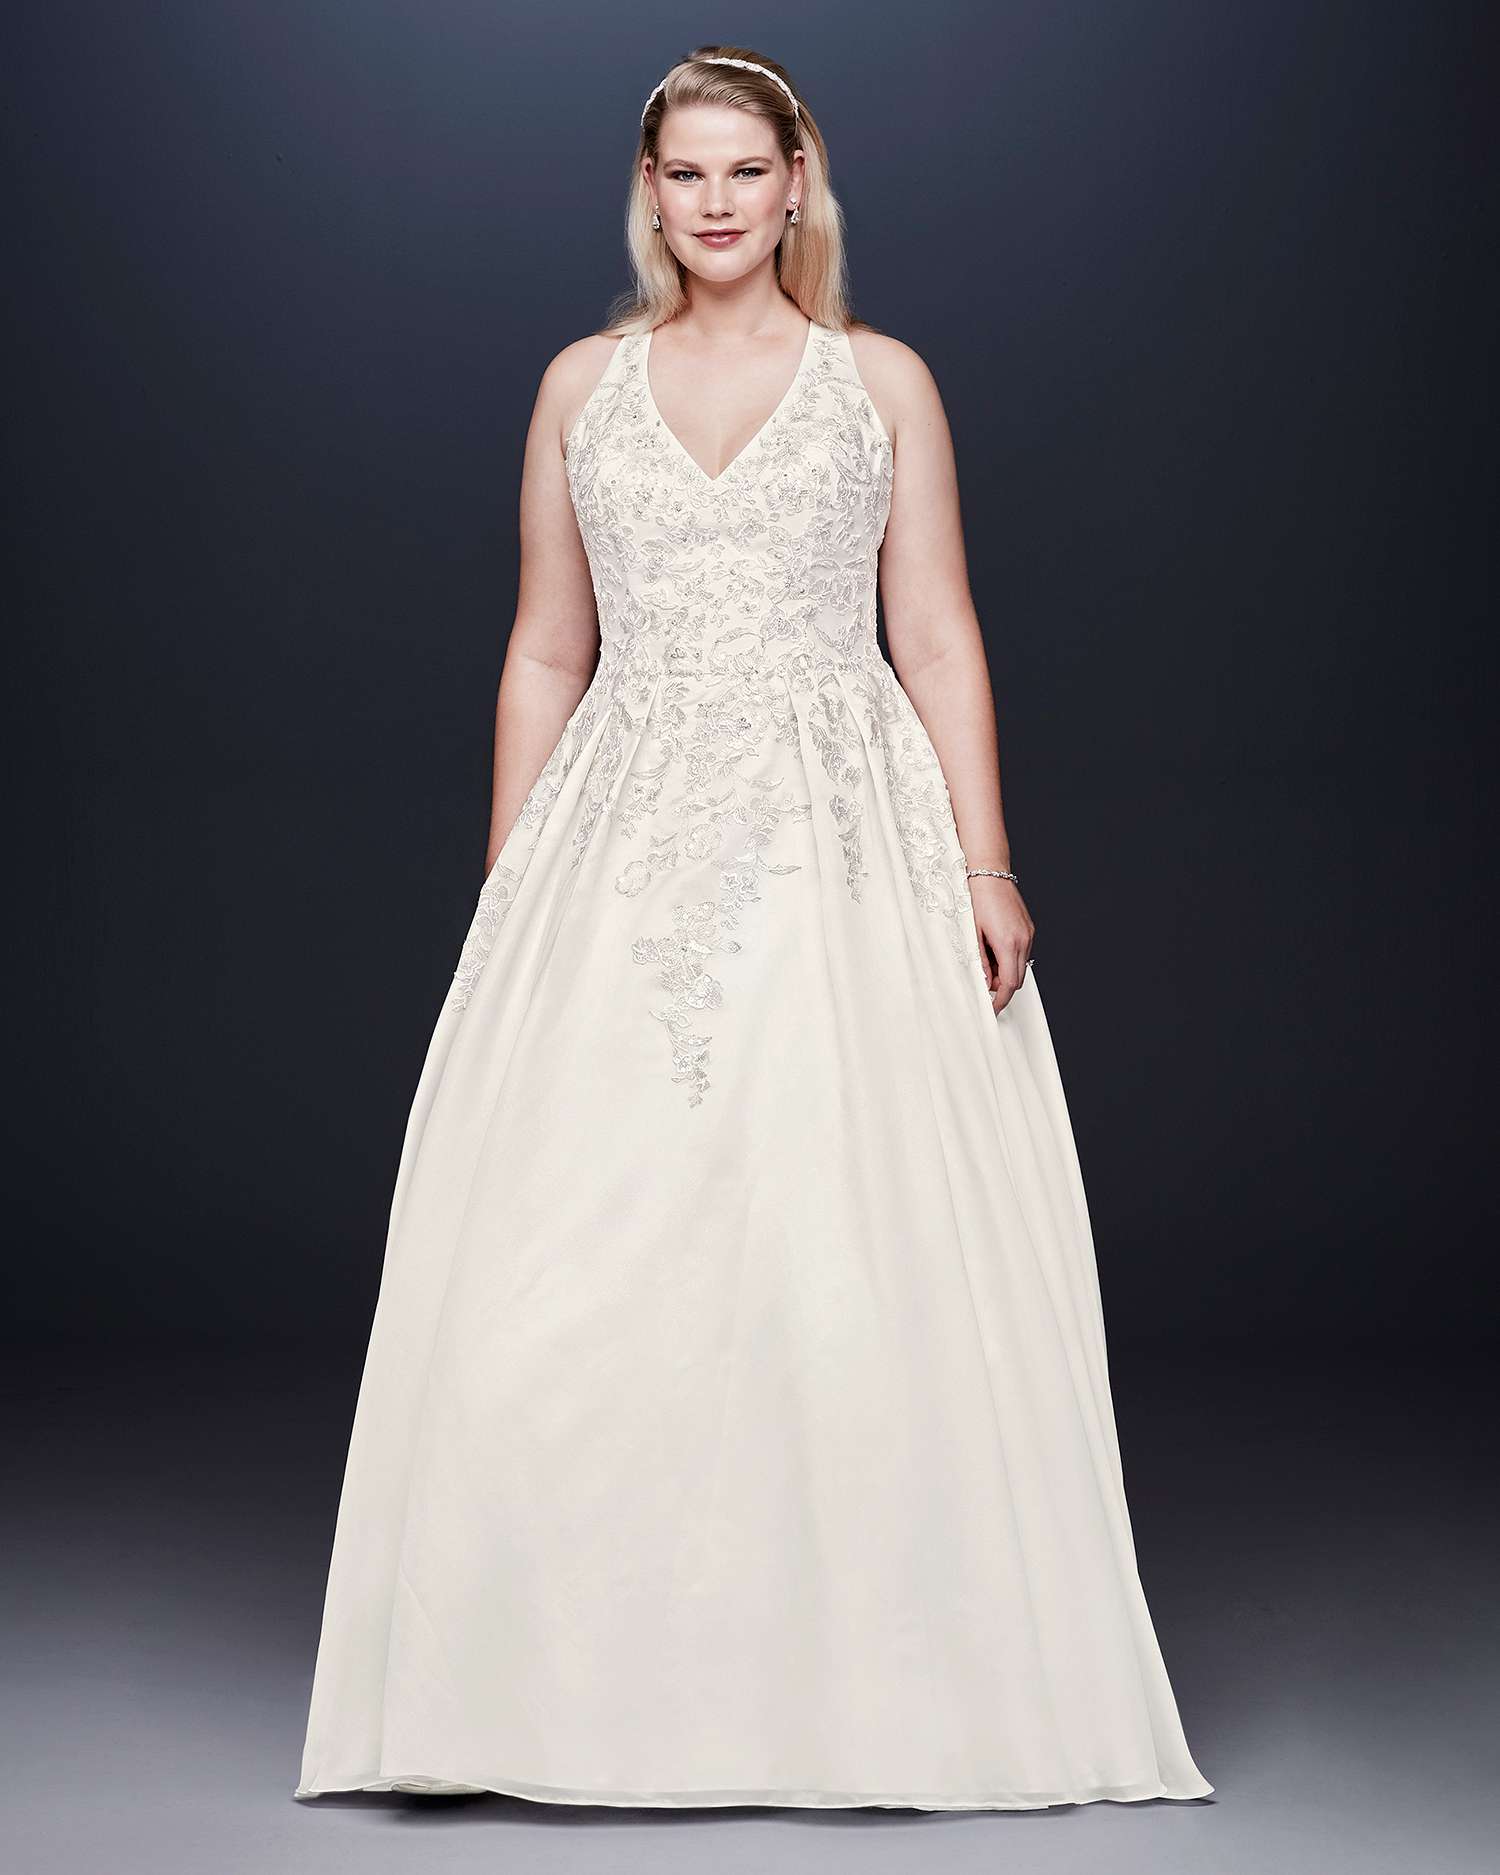 david's bridal wedding dresses 2019